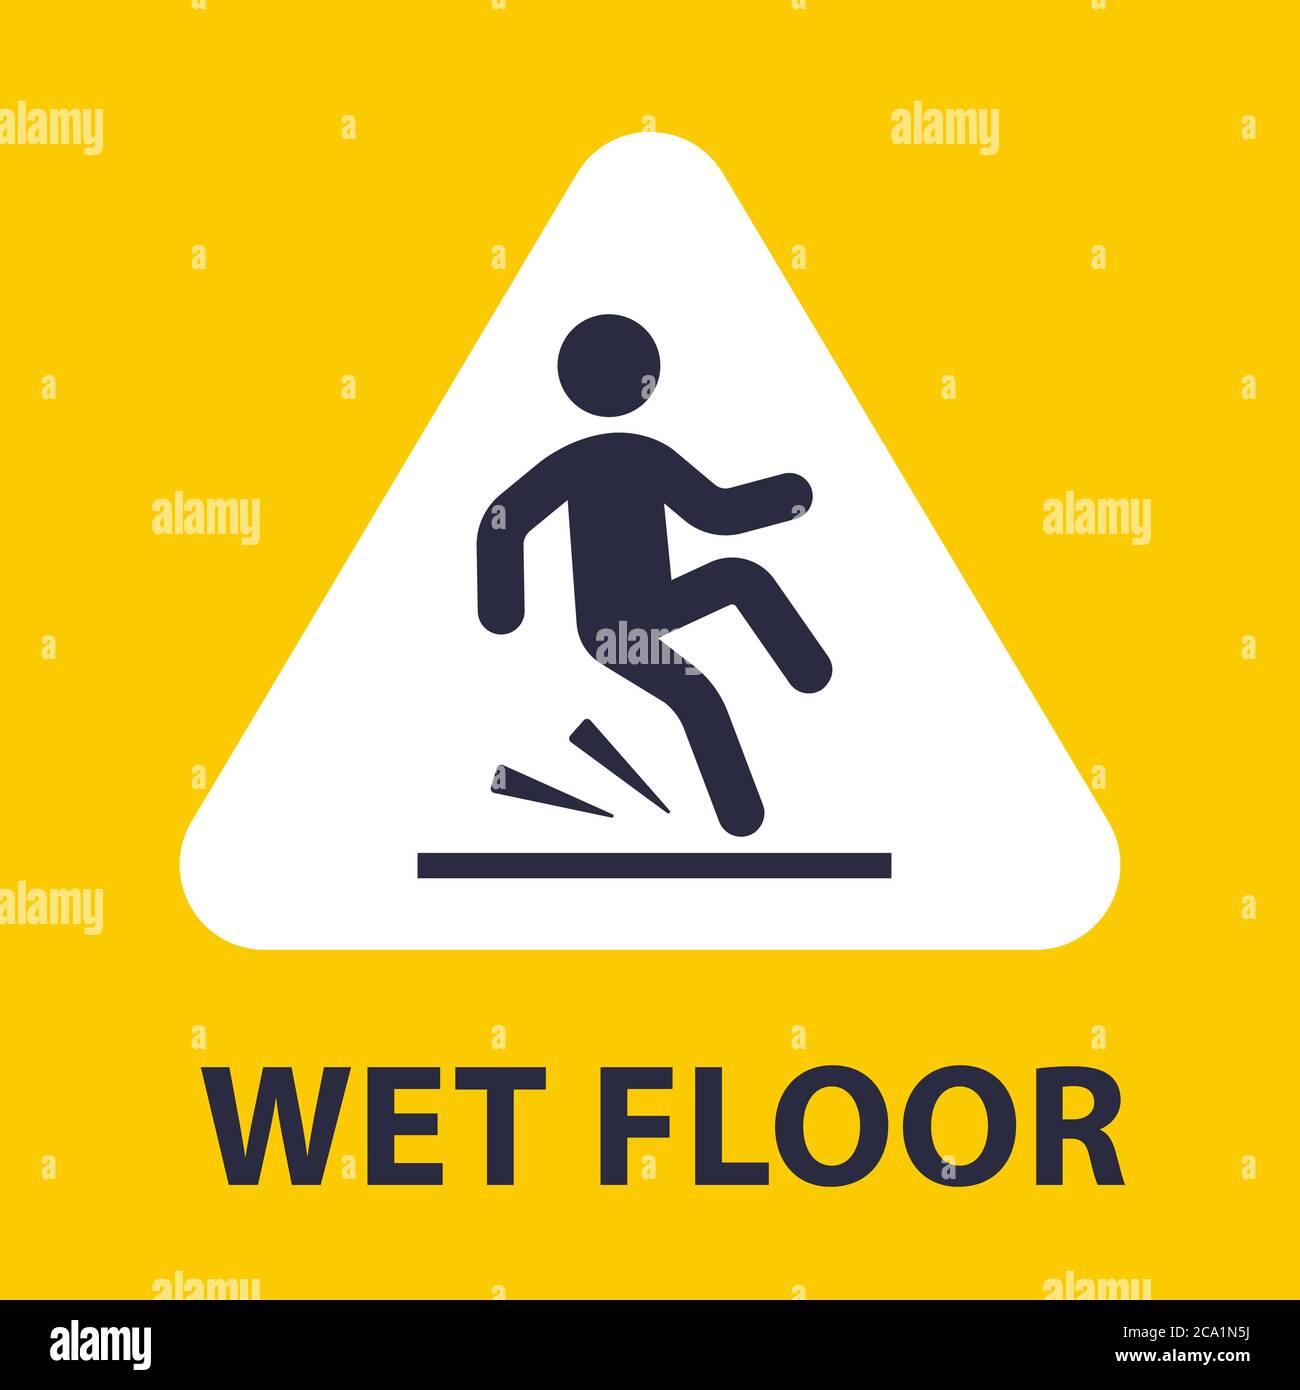 plaque slip on wet floor. the fall of man. flat vector illustration. Stock Vector